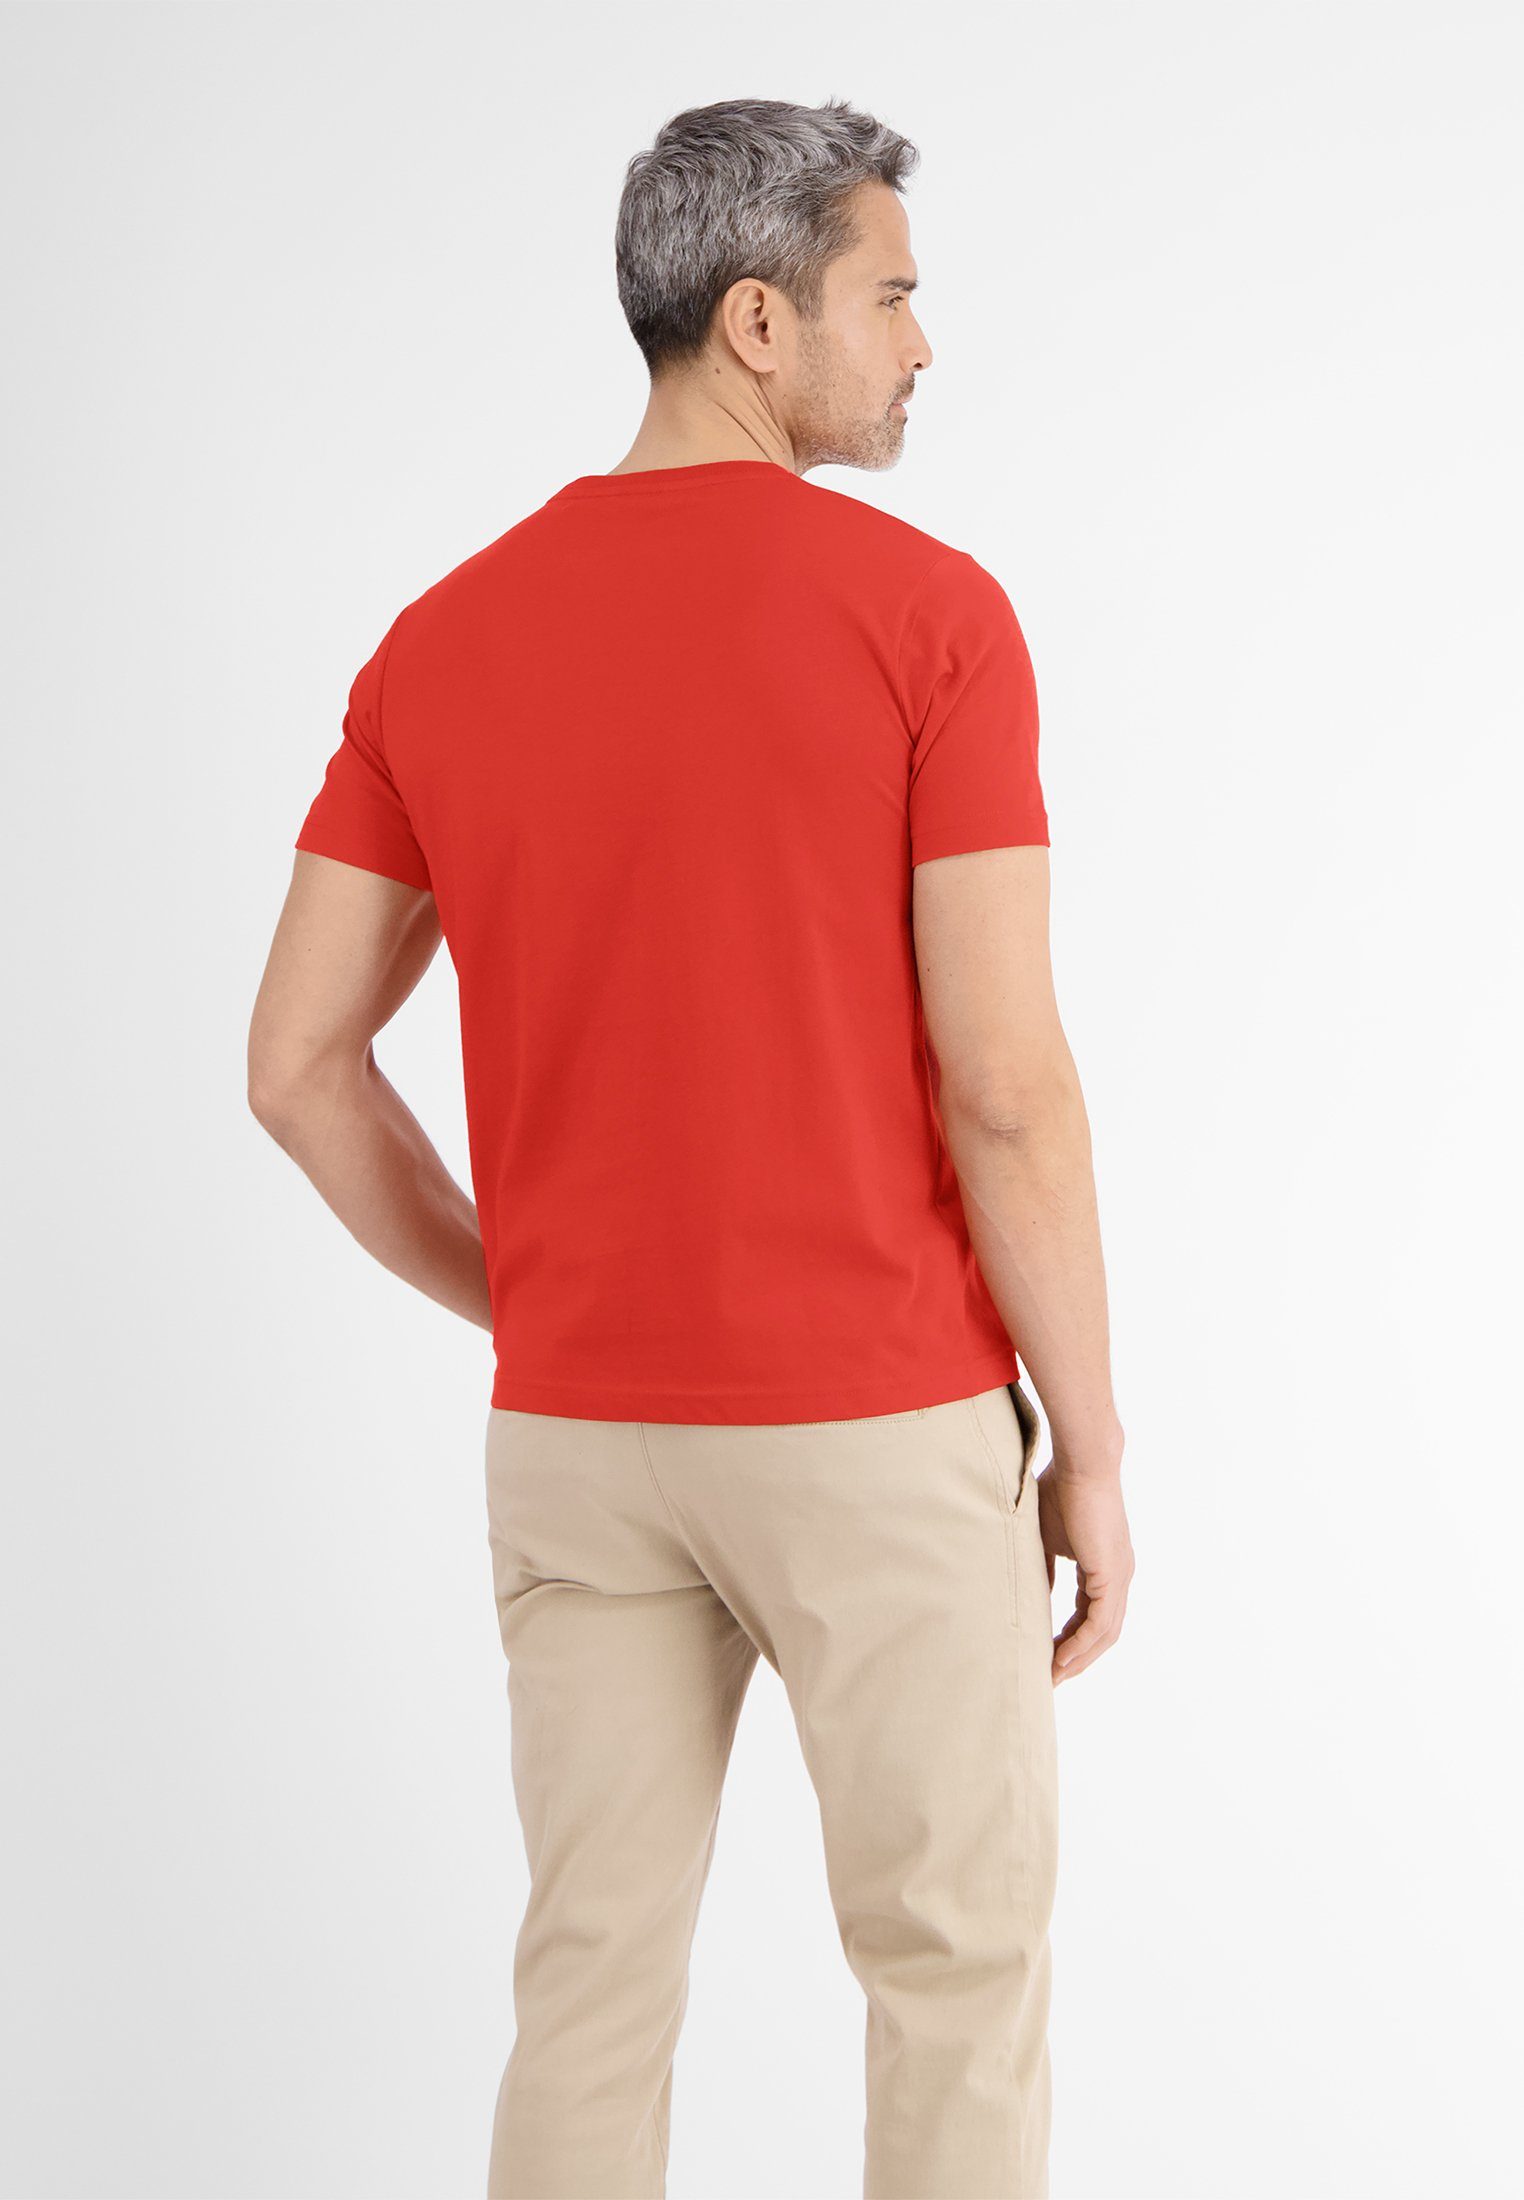 RED LAVA T-Shirt Adventure* T-Shirt LERROS LERROS *Next